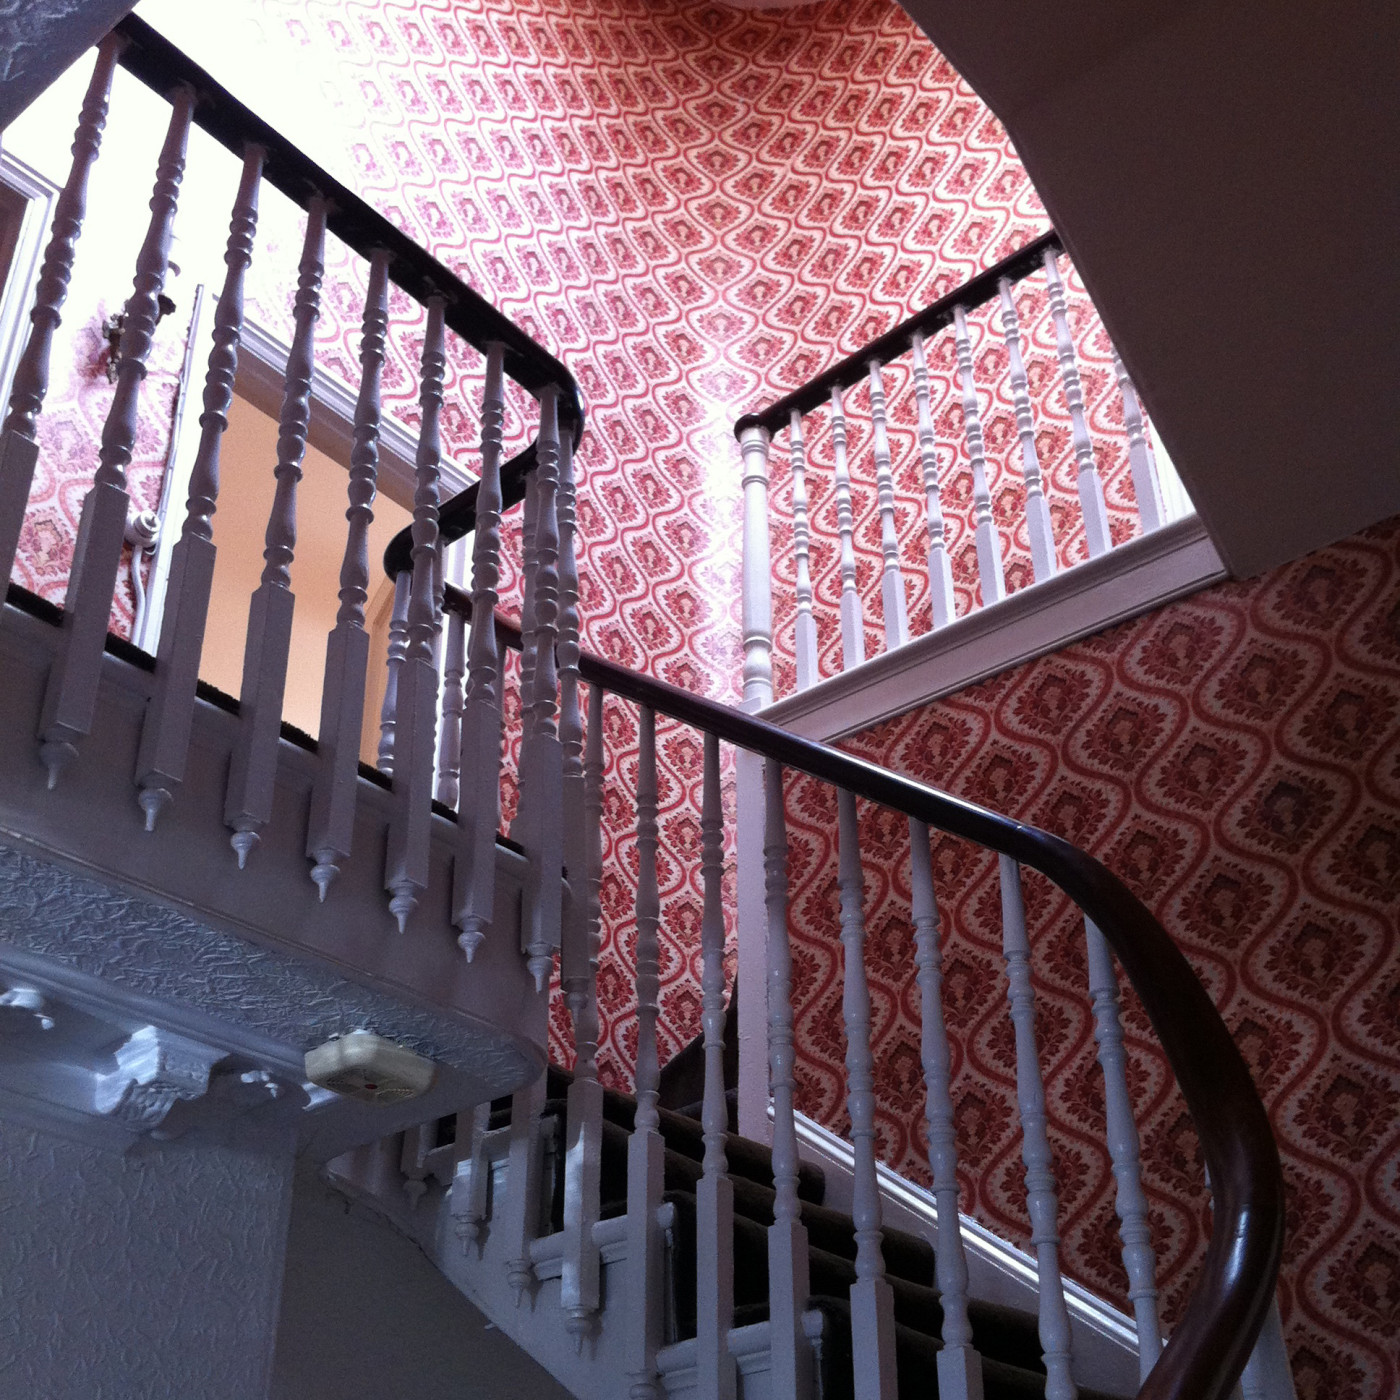 24 mercer view of staircase prior to refurbishment